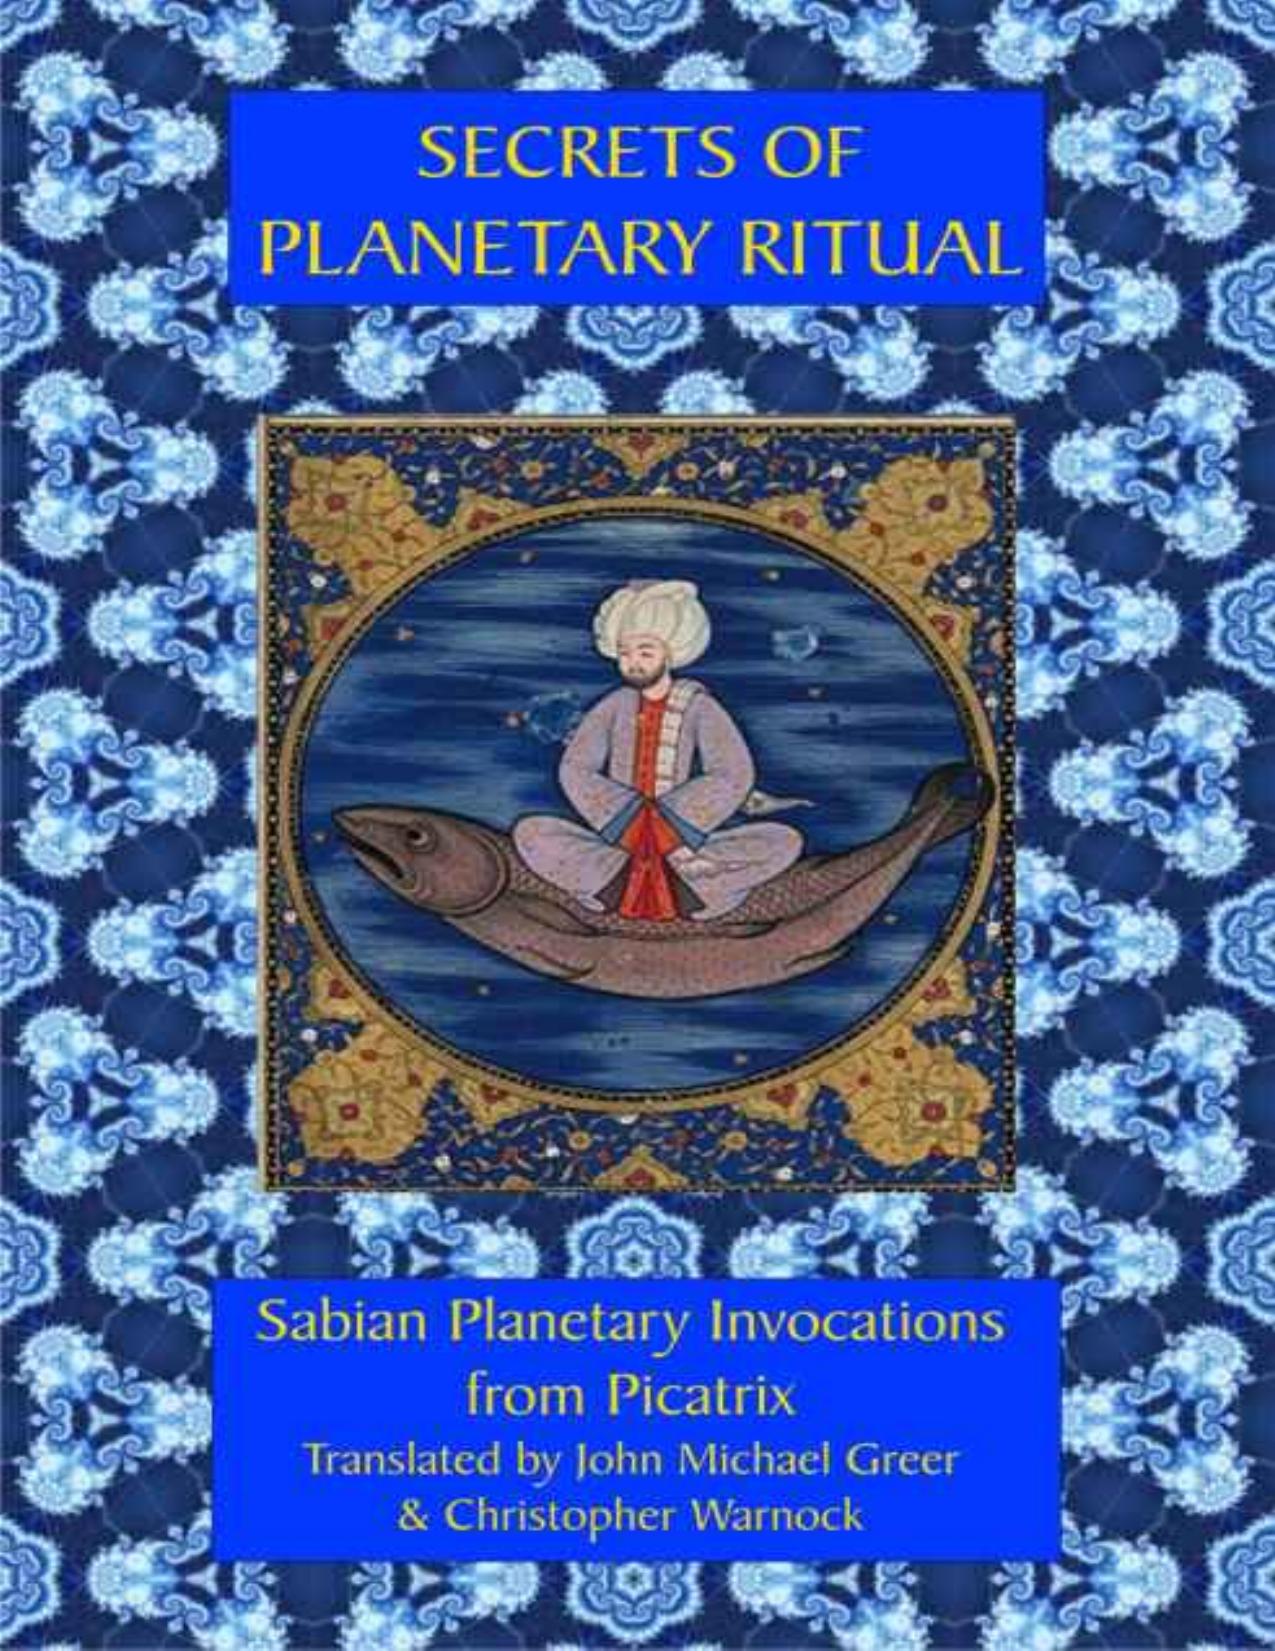 Secrets of Planetary Ritual 2nd Edition